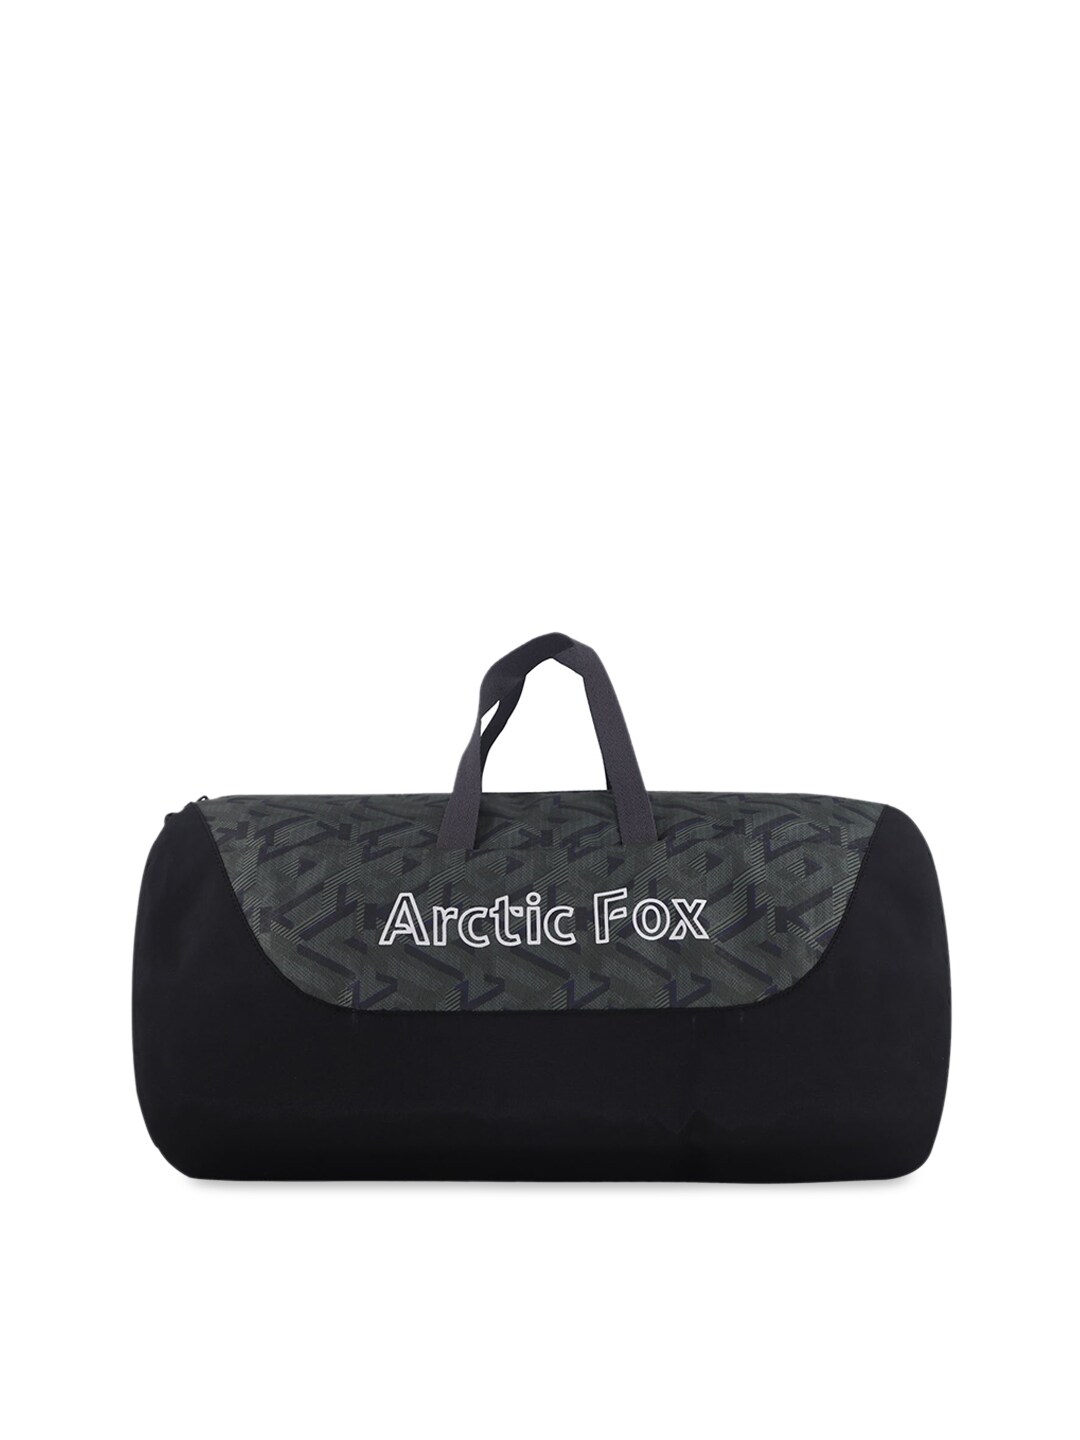 Arctic Fox Unisex Grey & Black Printed Barrel Duffle Bag Price in India